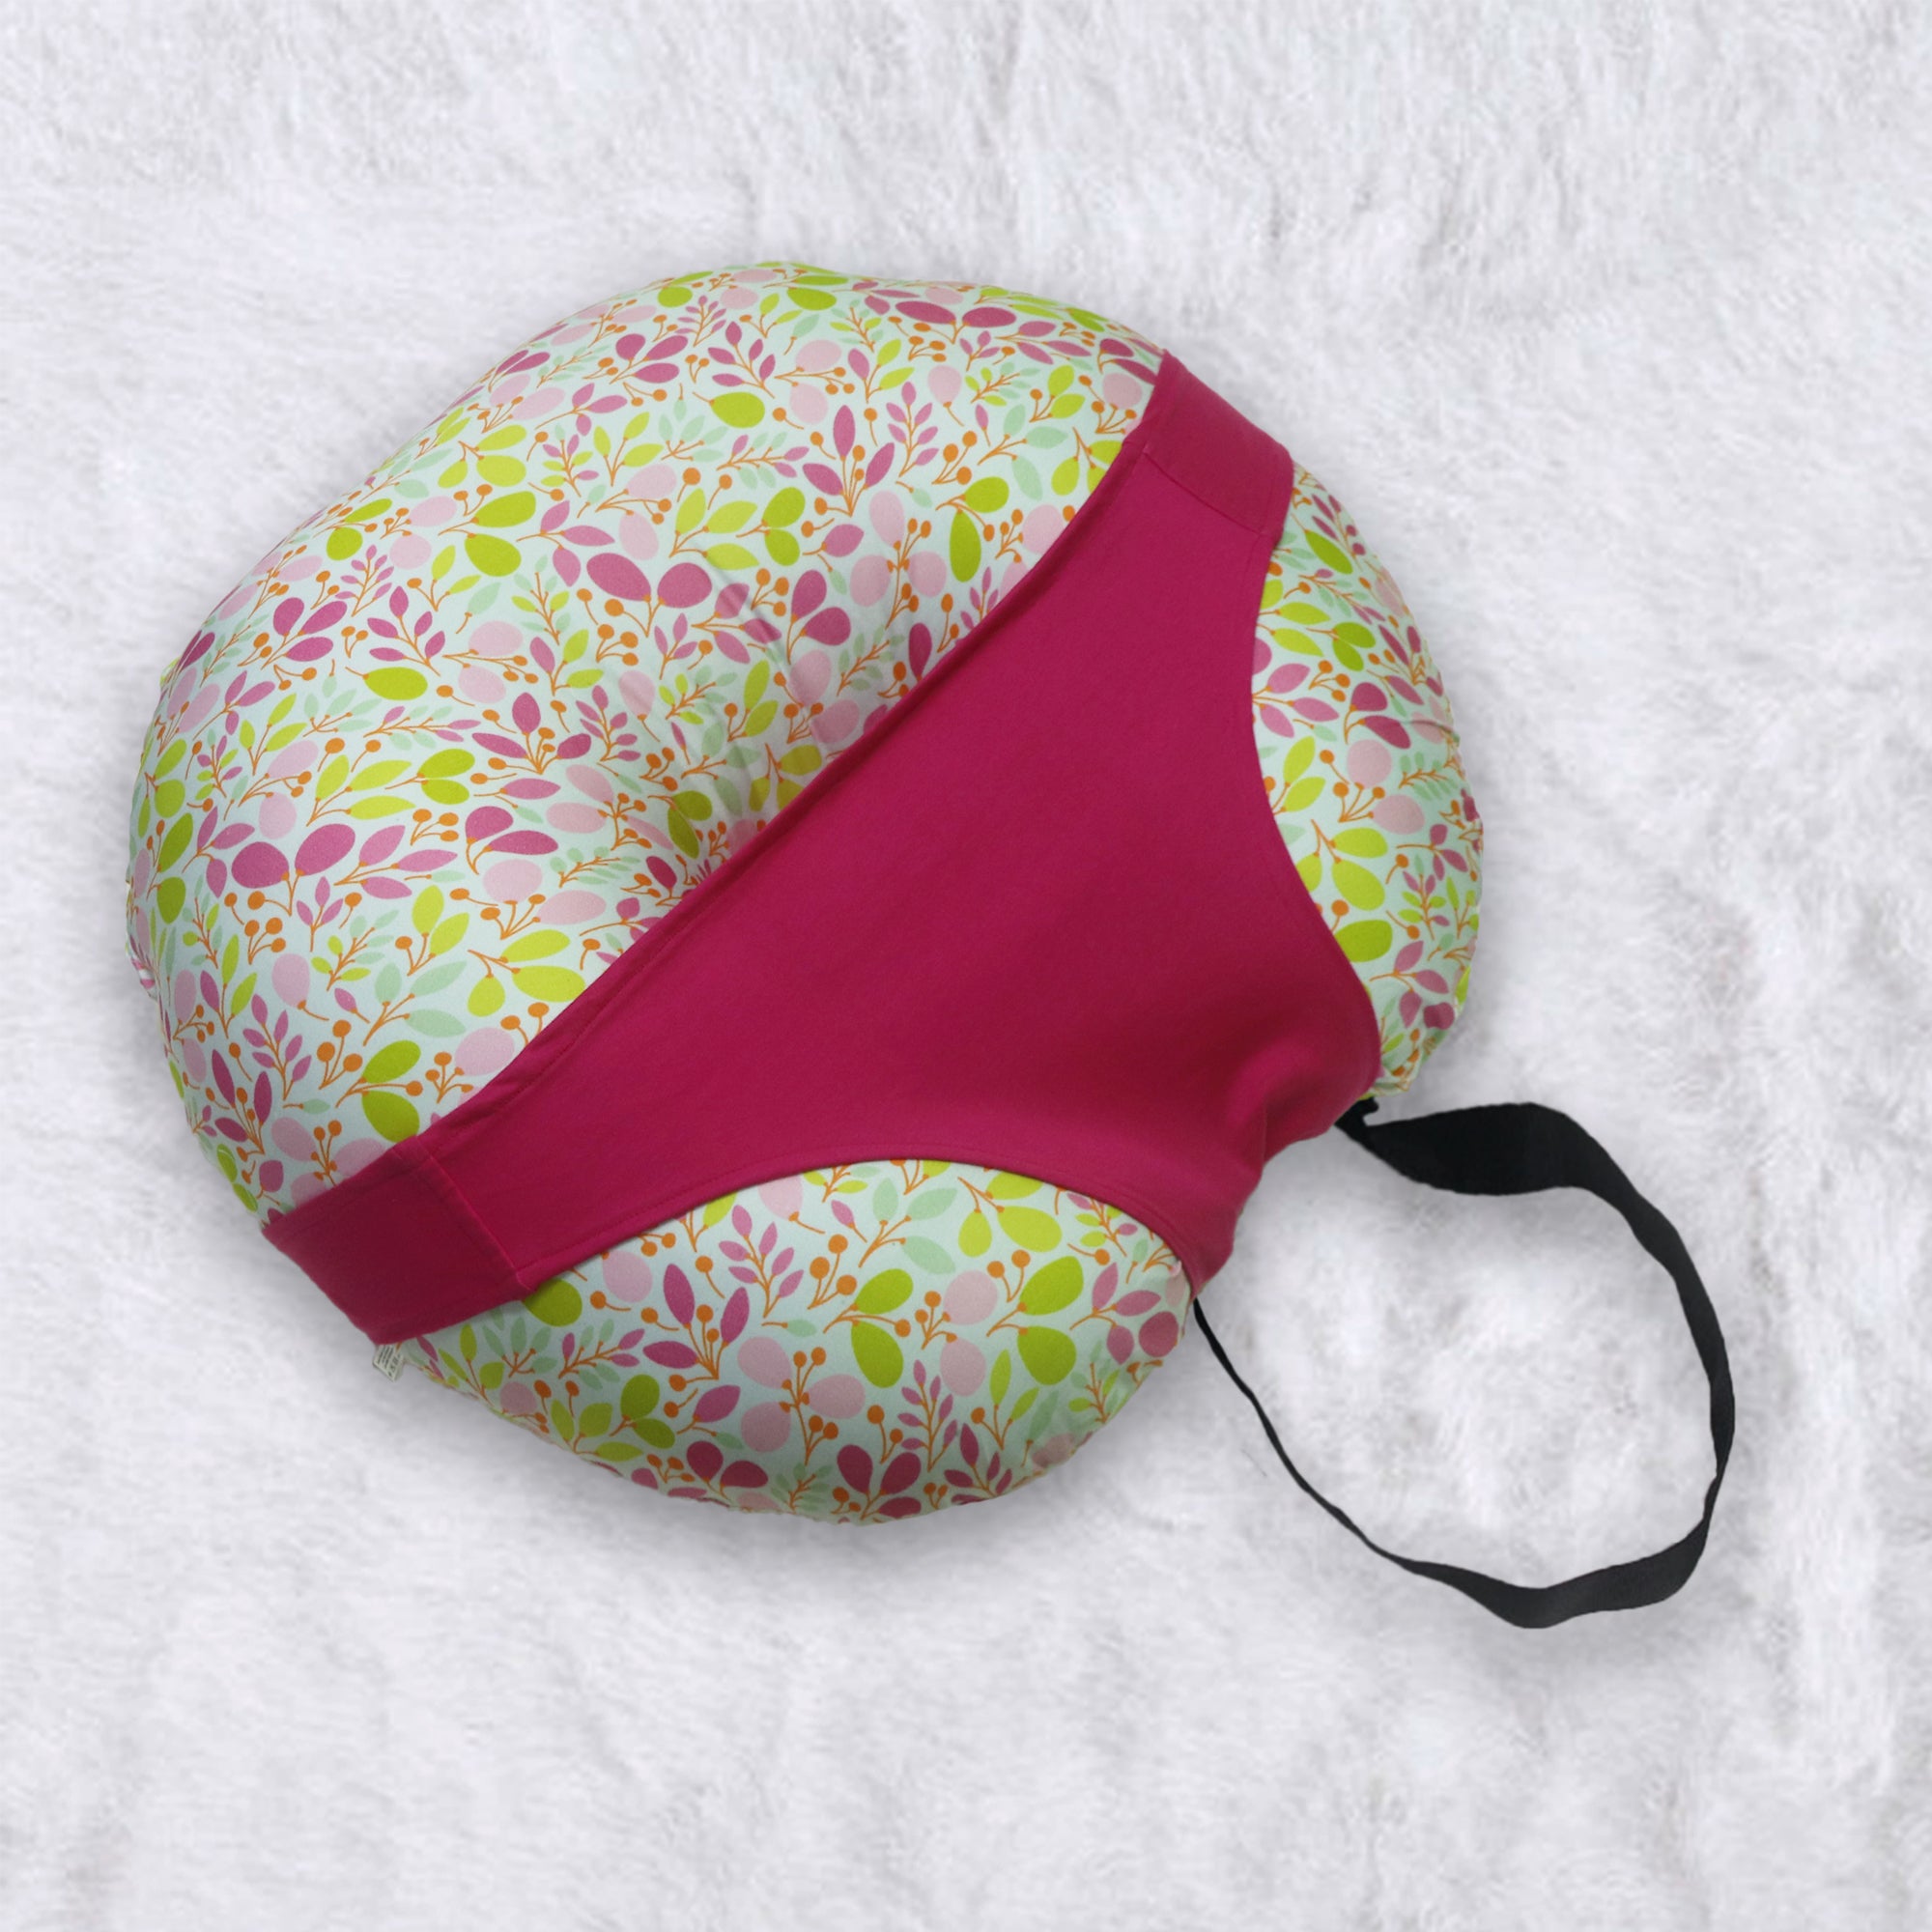 Happy Bouquet - Baby Feeding Pillow | Nursing Pillow | Breastfeeding Pillow